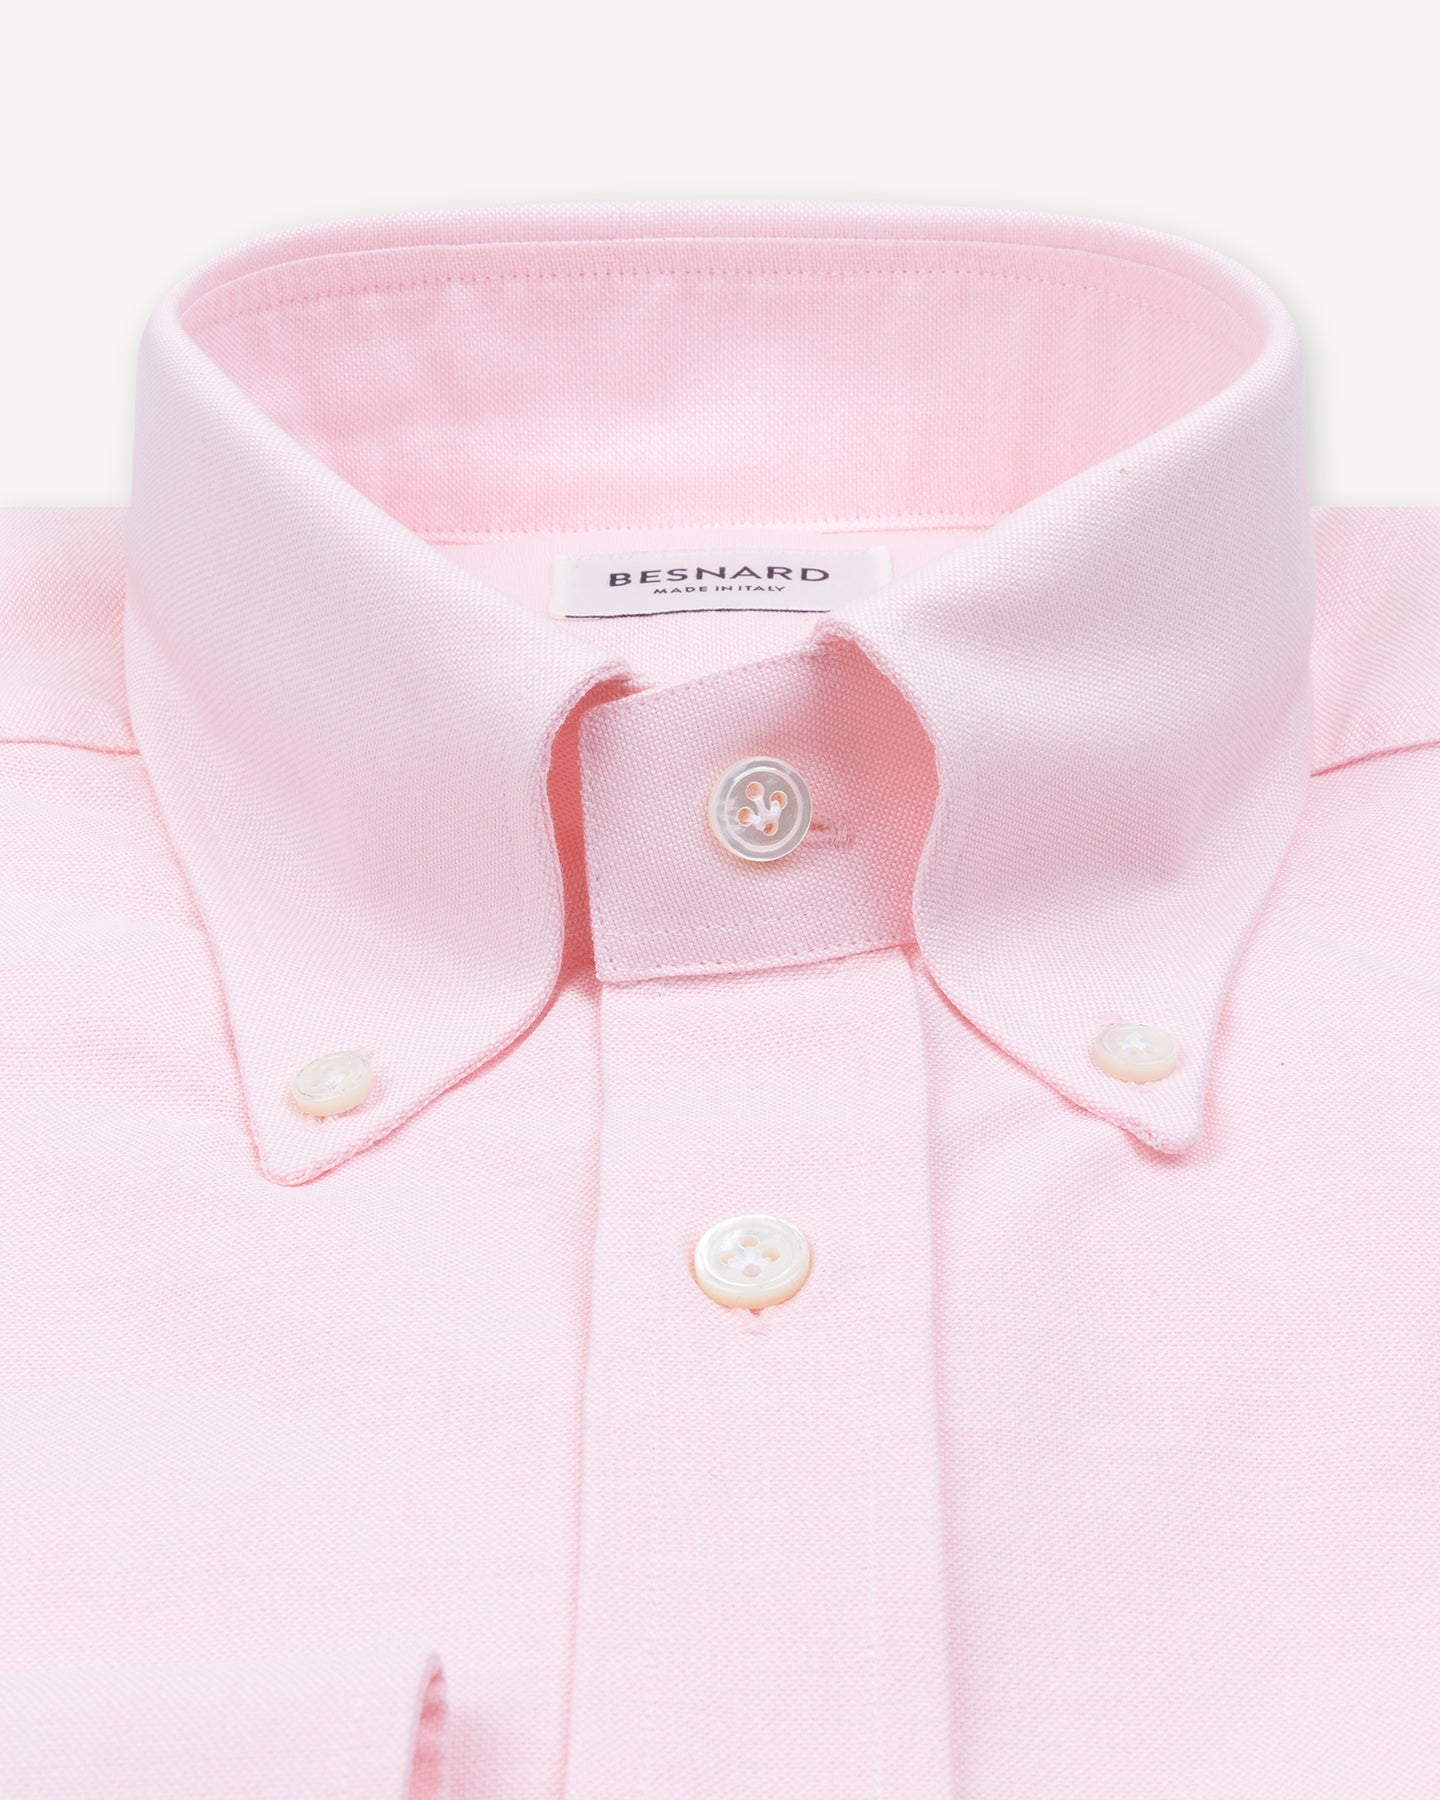 Pink OCBD Shirt with collar roll